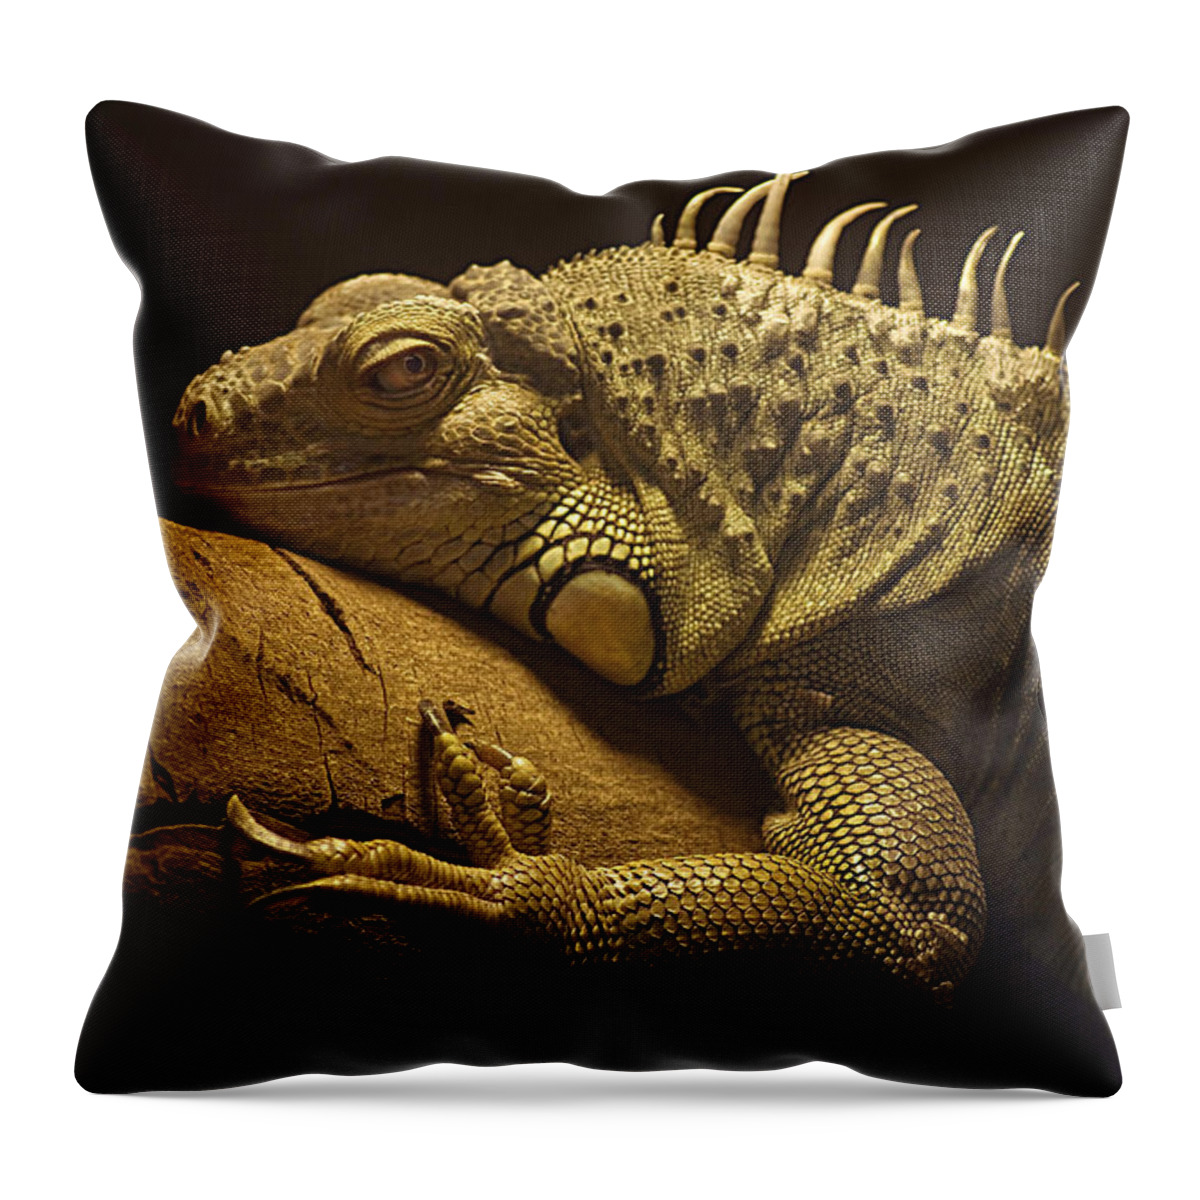 Animal Themes Throw Pillow featuring the photograph Iguana by John Dickson